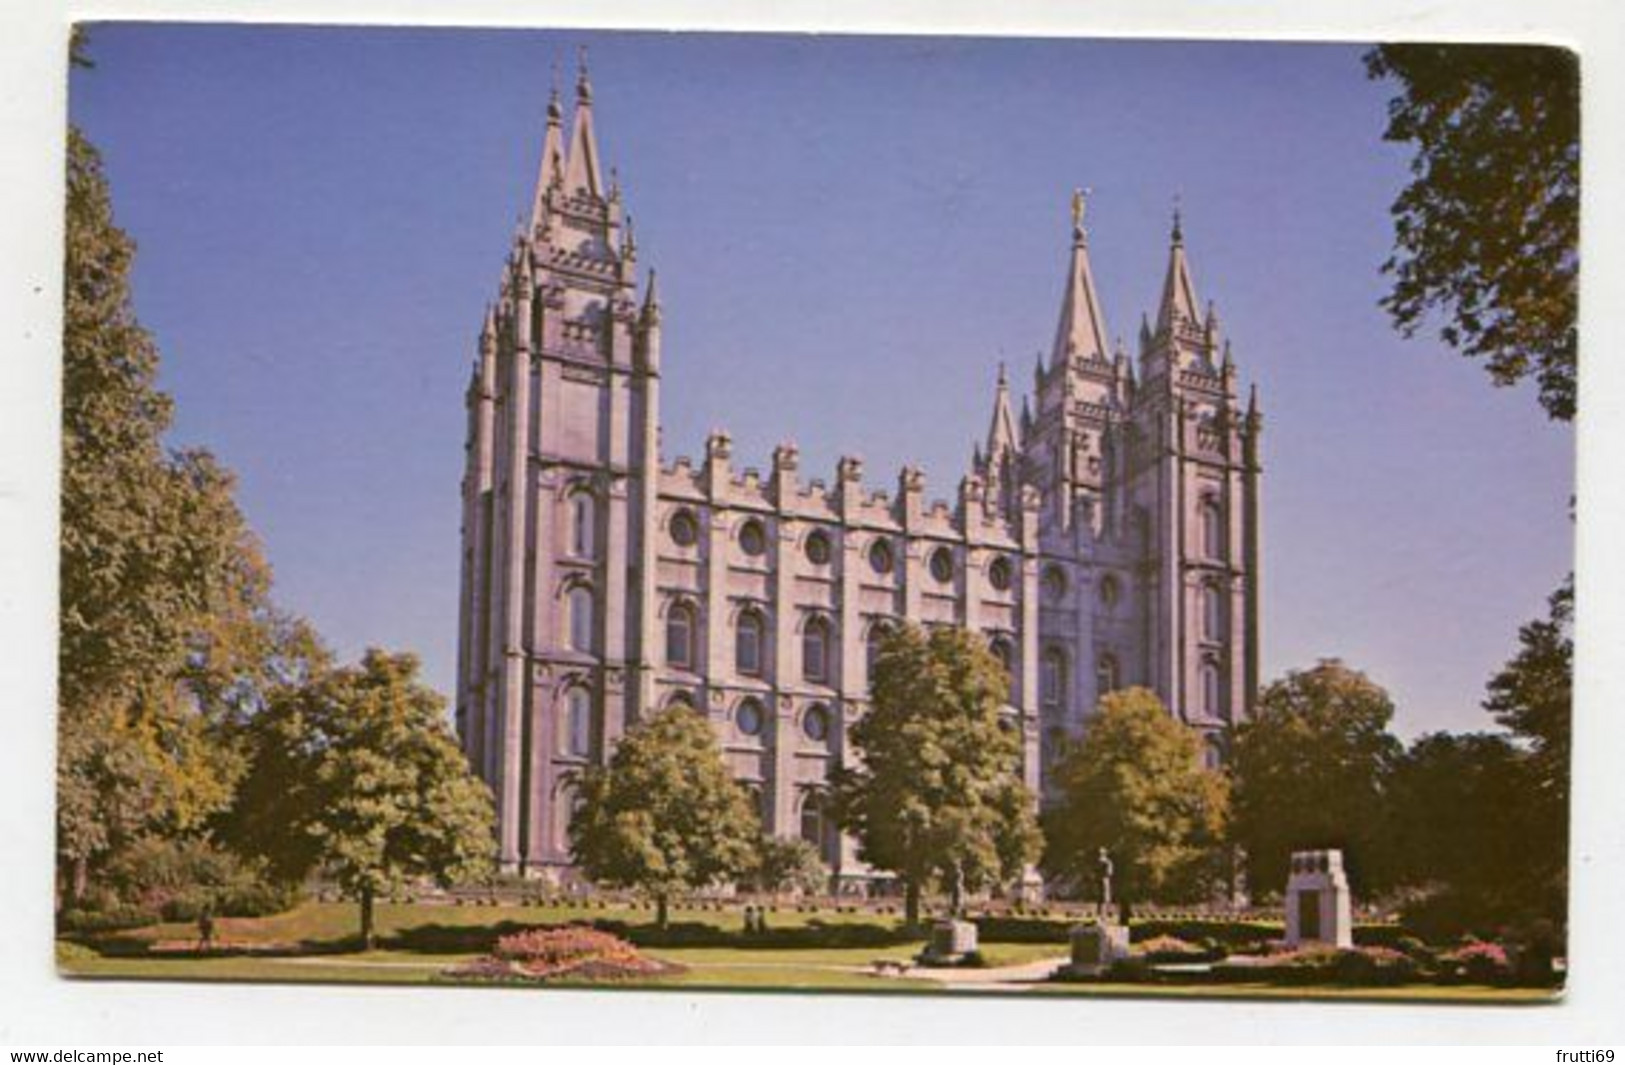 AK 110814 USA - Utah - Salt Lake City - Utah Temple - Salt Lake City